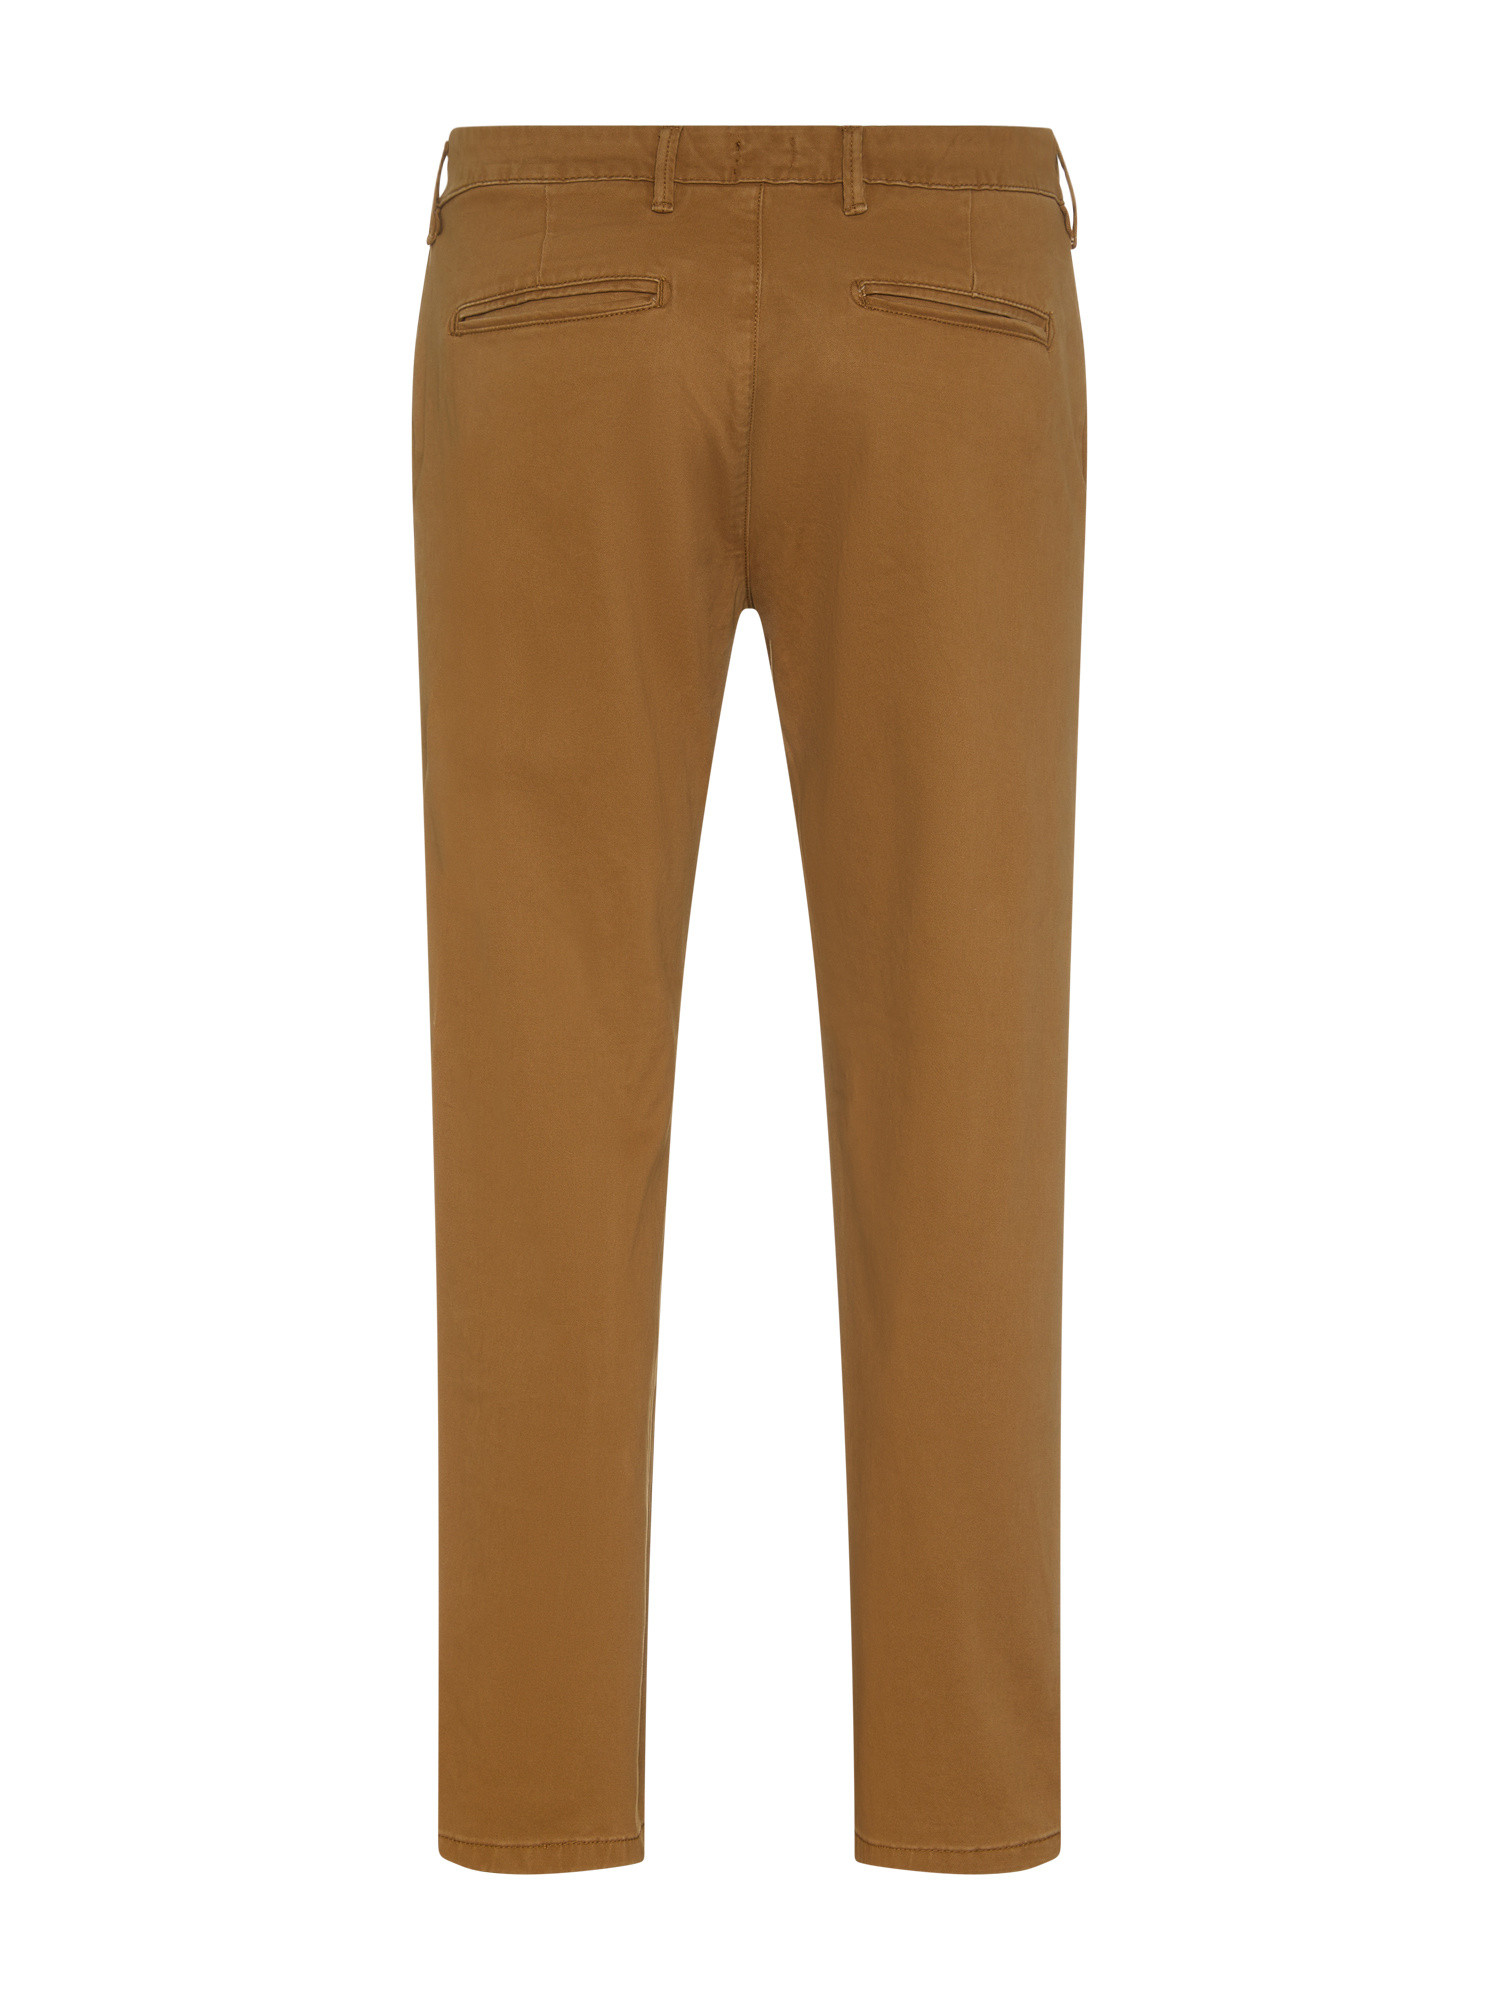 JCT - Pantaloni chino, Giallo scuro, large image number 1